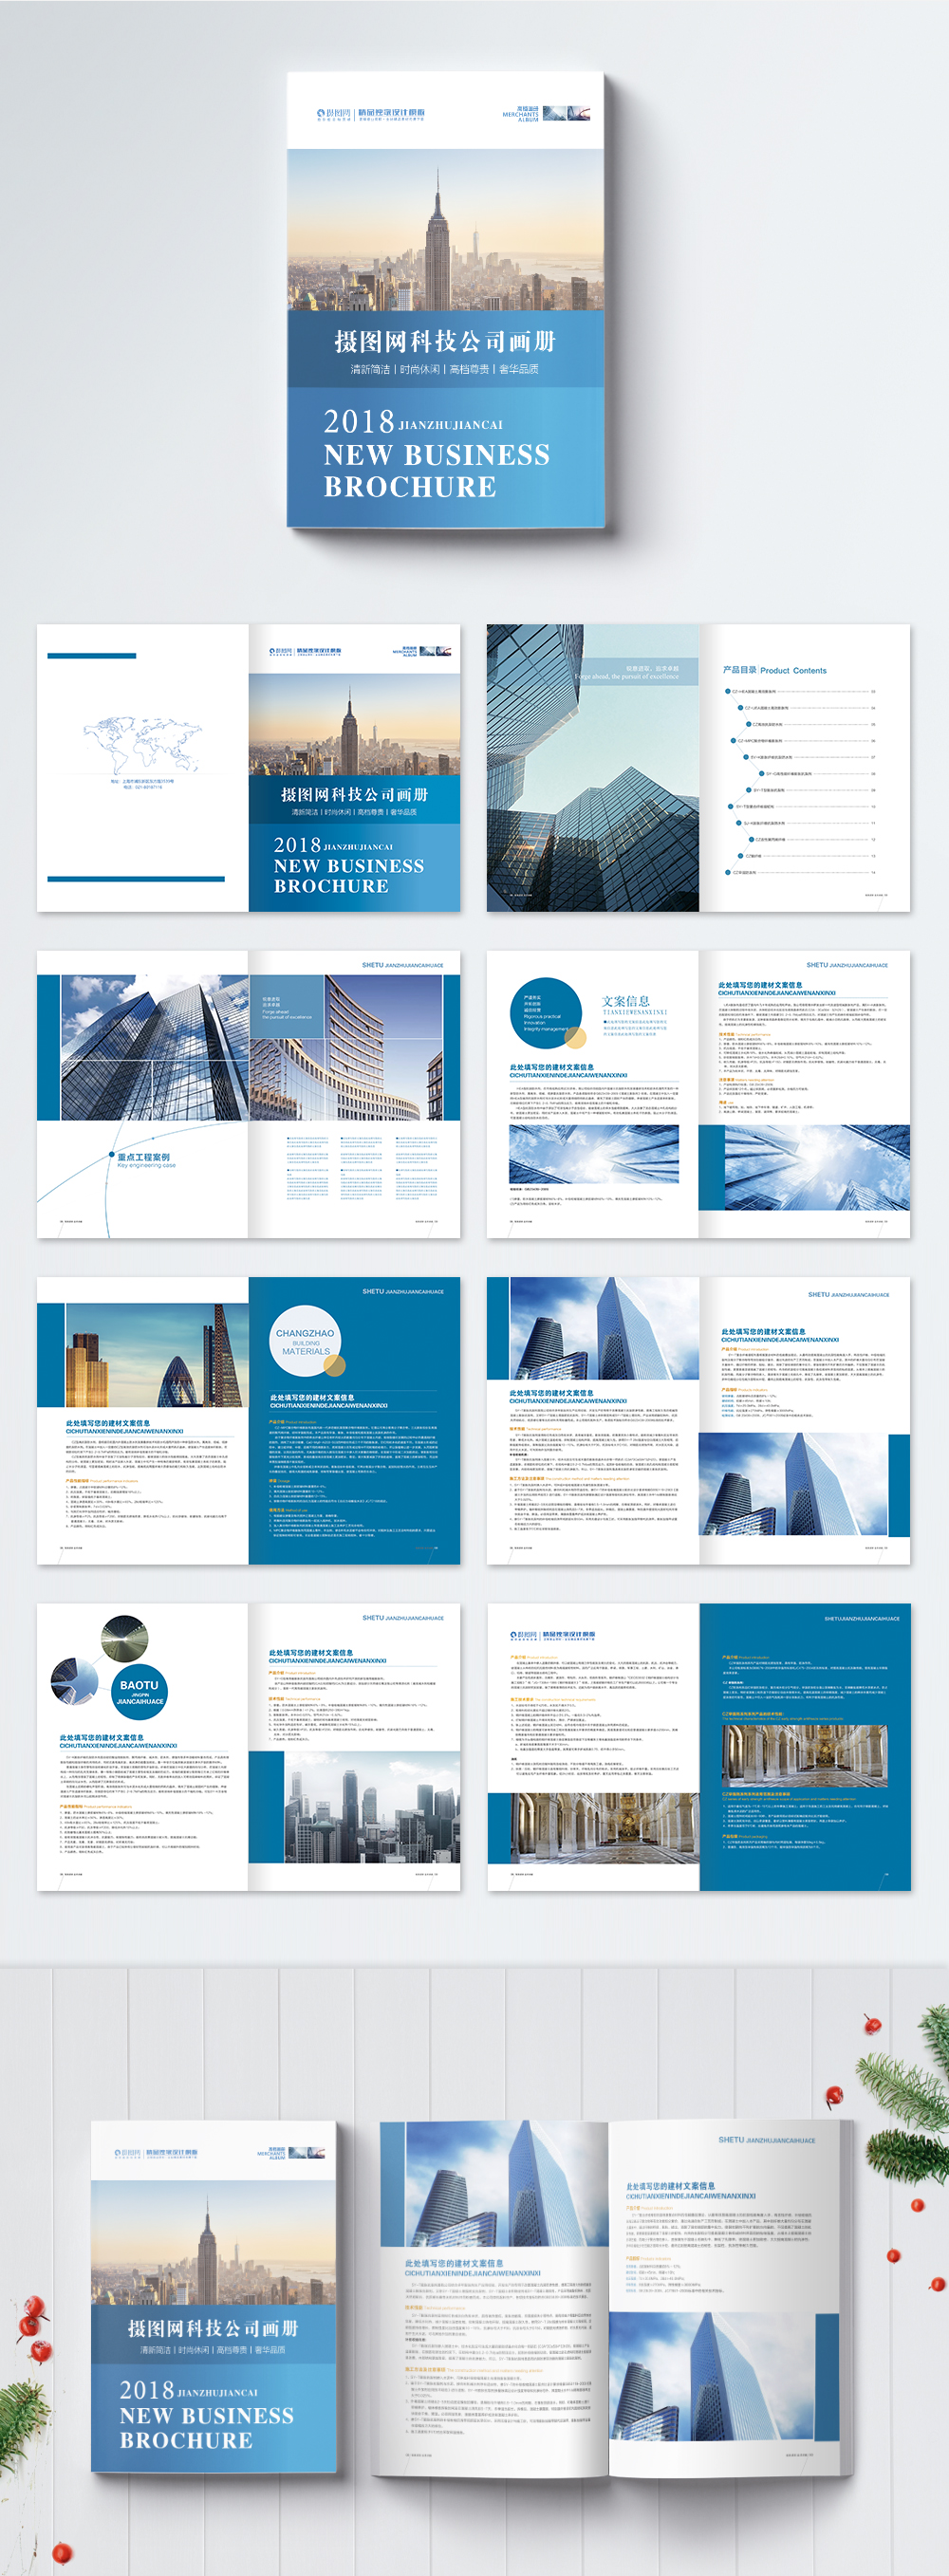 Blue business enterprise brochure template image_picture free download ...